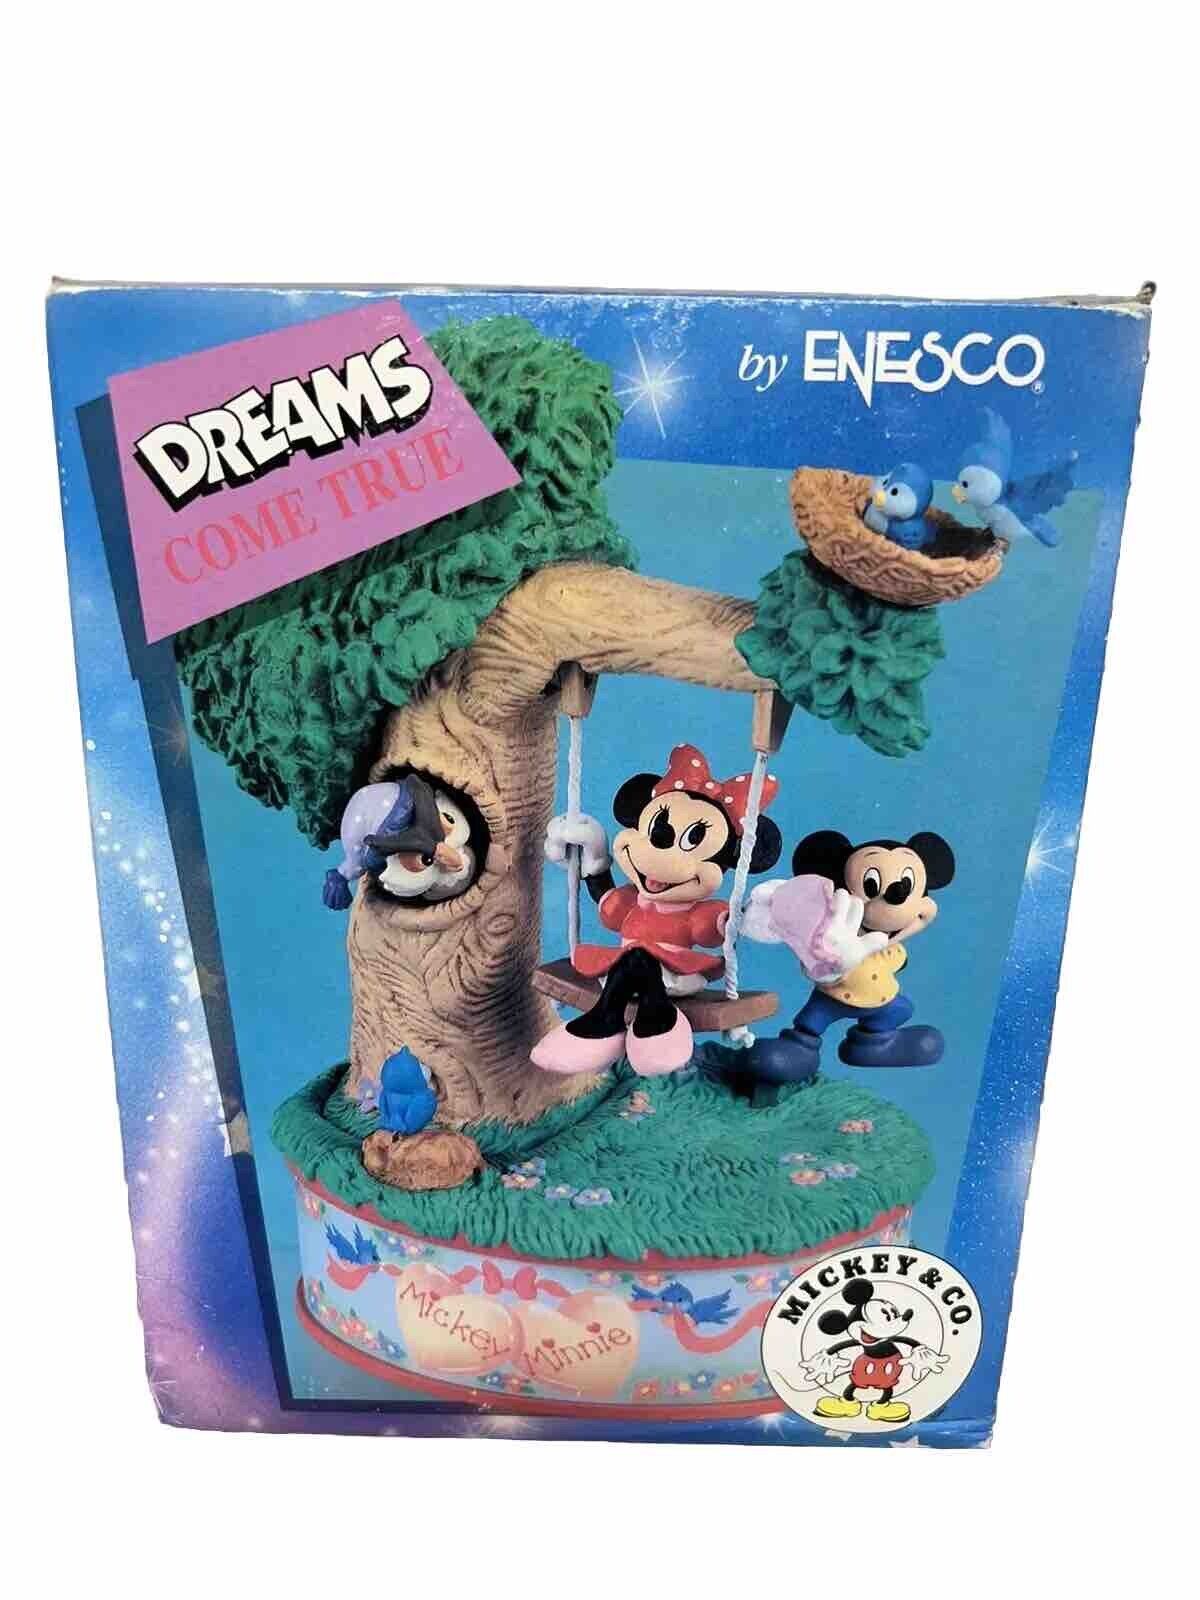 Enesco Disney Dreams Come Tree Music Box Mickey Mouse Minnie Owl Rare WORKS